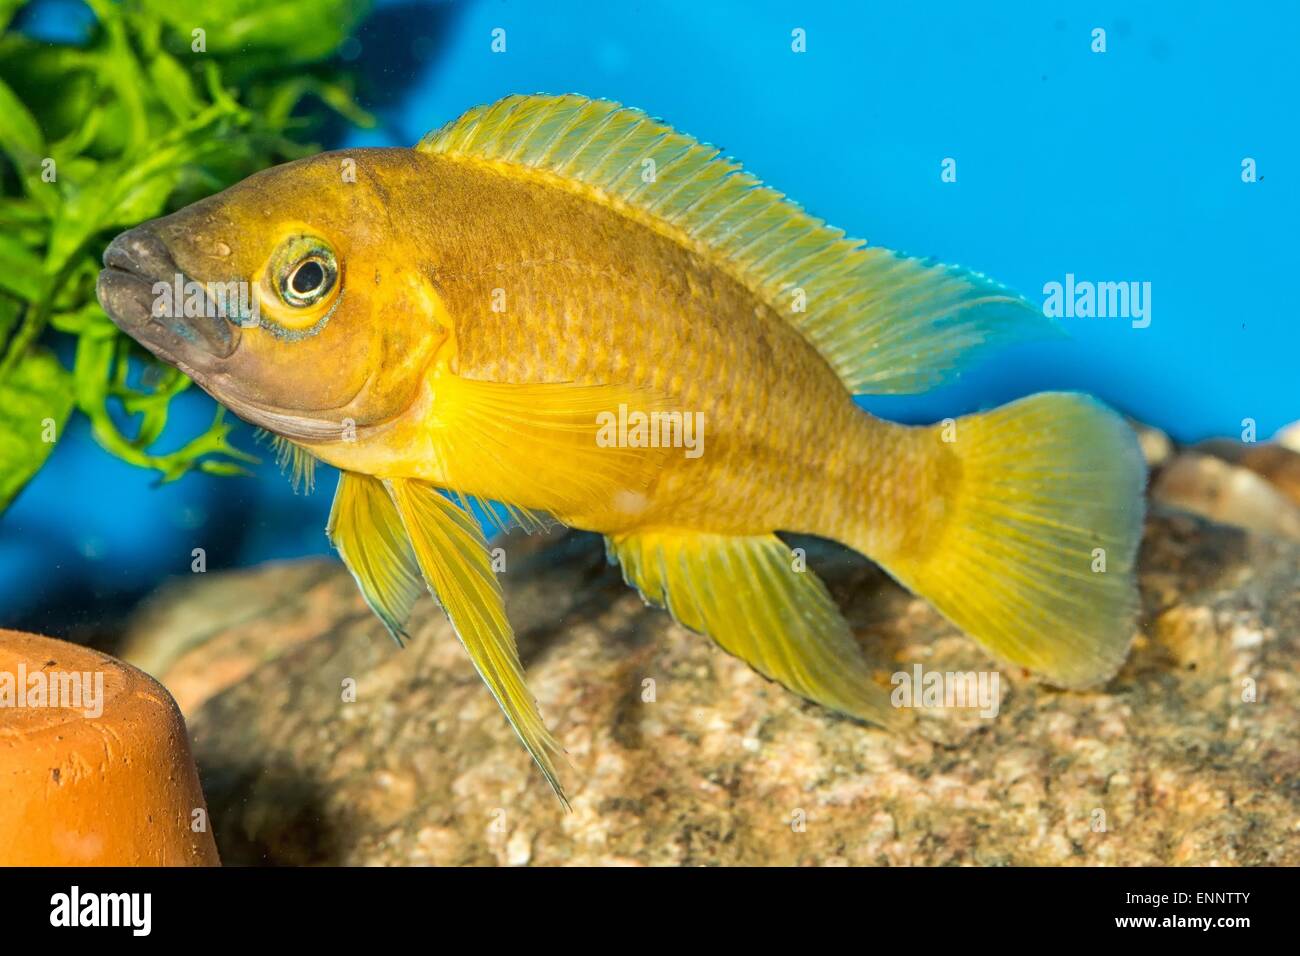 Tropical freshwater aquarium fish from genus Neolamprologus. Stock Photo